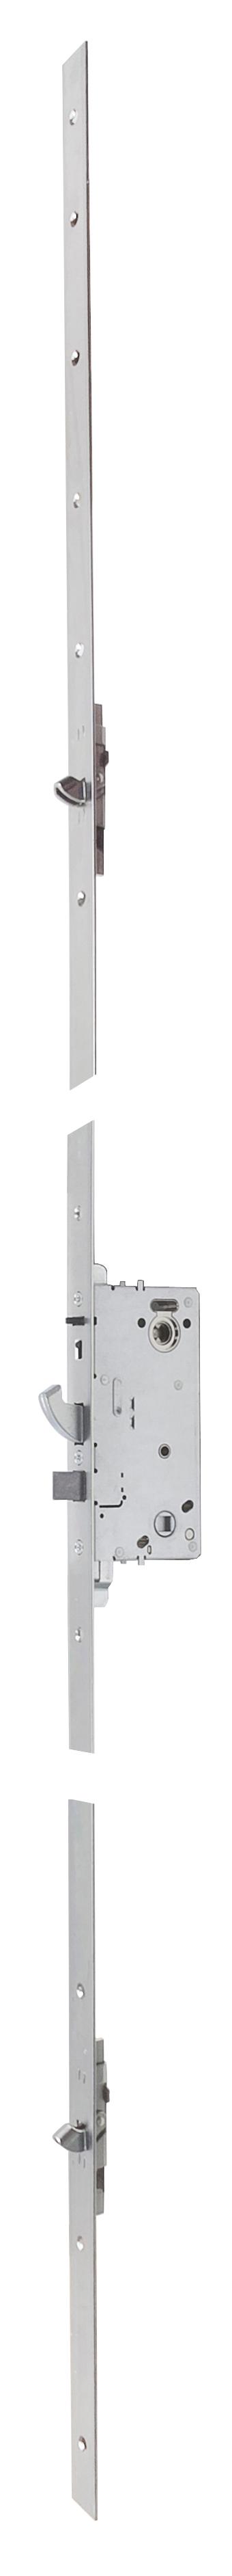 Ruko YD 3-point locking box - 2061mm H, D 50mm, 25mm post